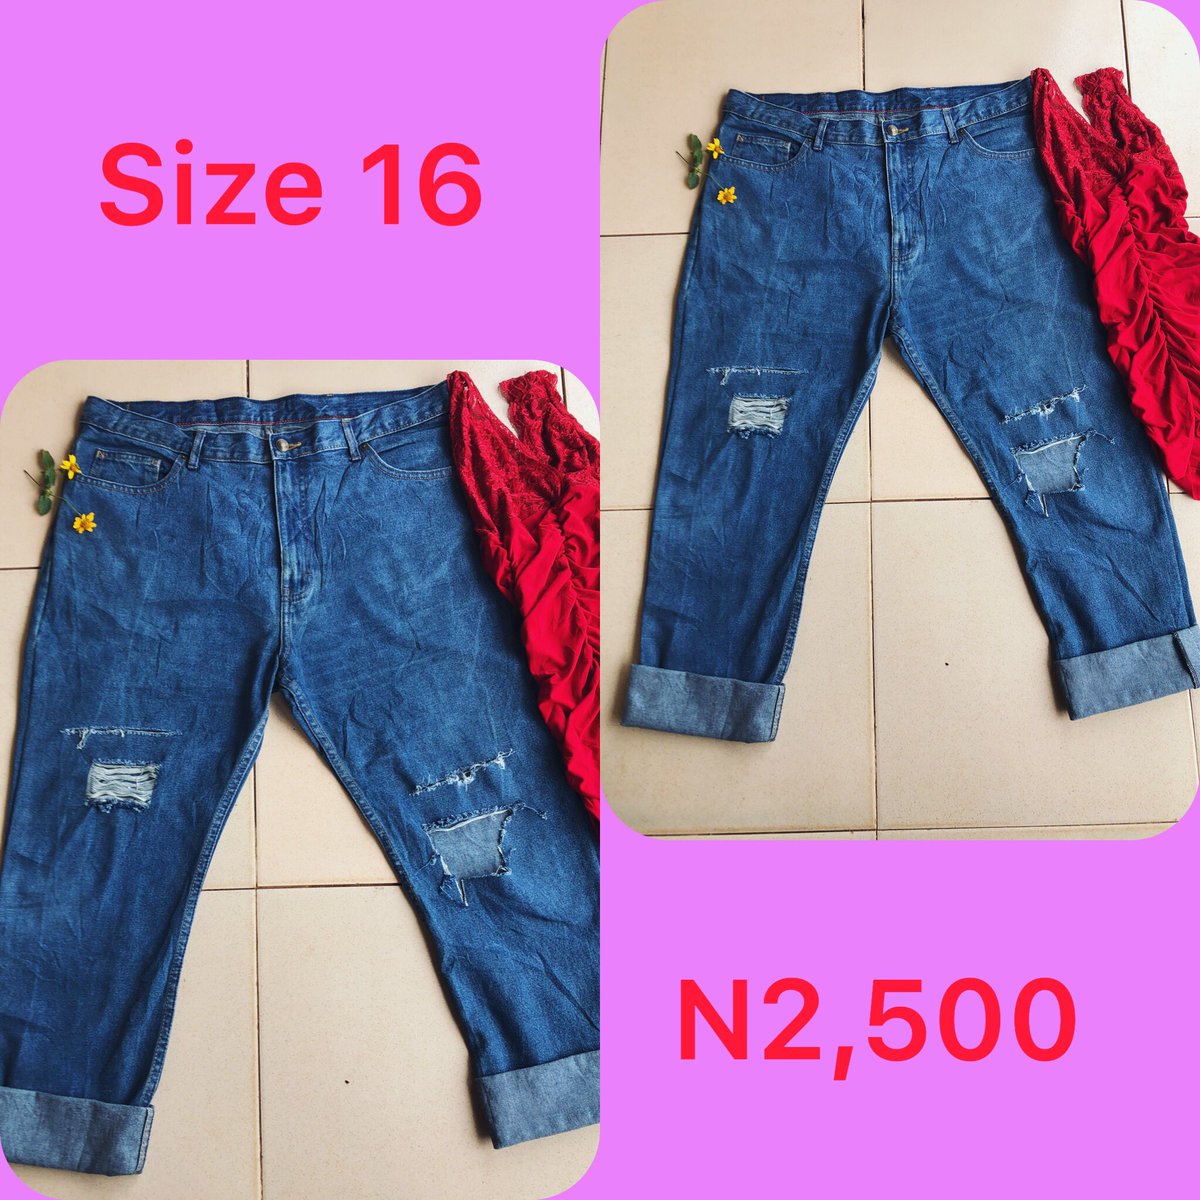 Slide 1: bf jeans      Size 10, N2,500Slide 2: bf jeans       Size 16, Price: N2,500Slide 3: bf jeans       Size 12, Price: N2,500Slide 4: skinny jeans       Size 12, Price N2,500